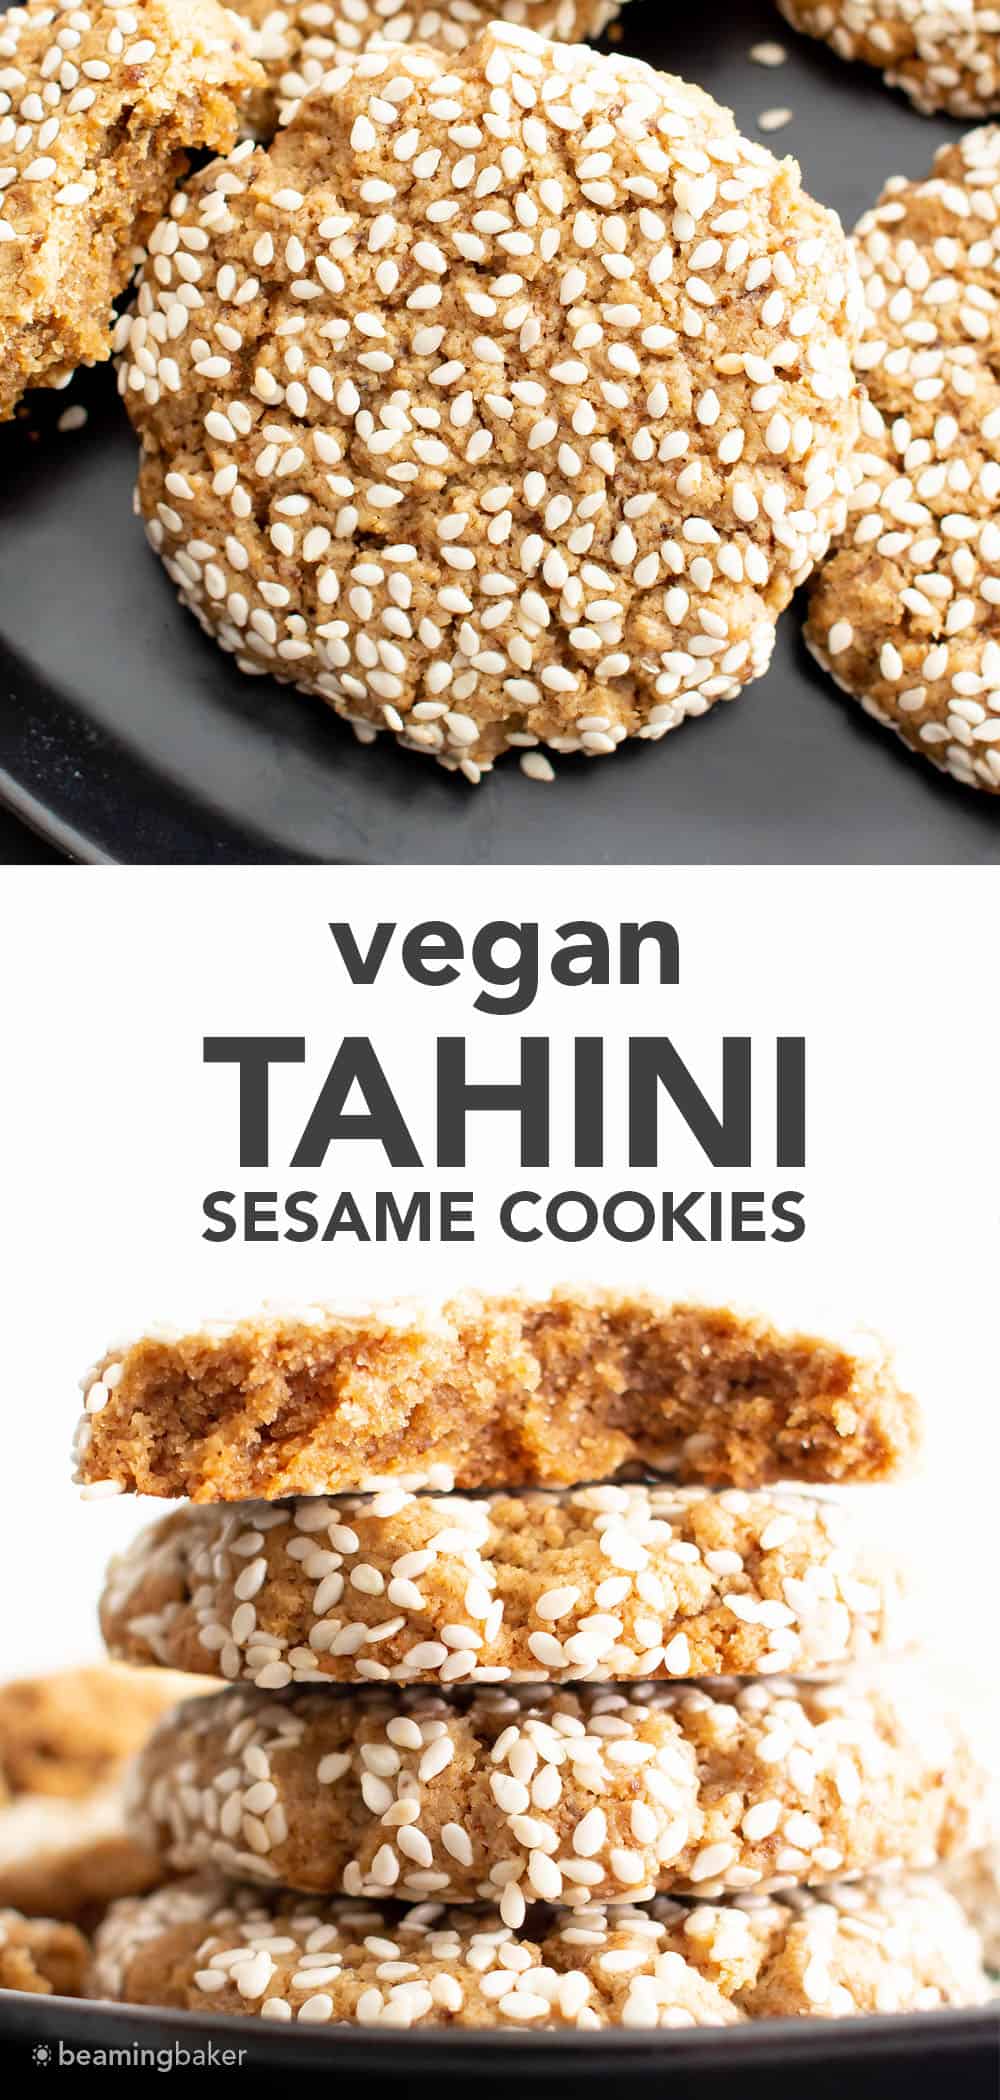 Vegan Sesame Tahini Cookies (Gluten Free): just 7 ingredients for the best vegan tahini cookies—buttery-rich, crisp sesame coating, tender on the inside. Delicious sesame tahini cookies that are gluten free! #Vegan #Sesame #Tahini #GlutenFree #Cookies | Recipe at BeamingBaker.com